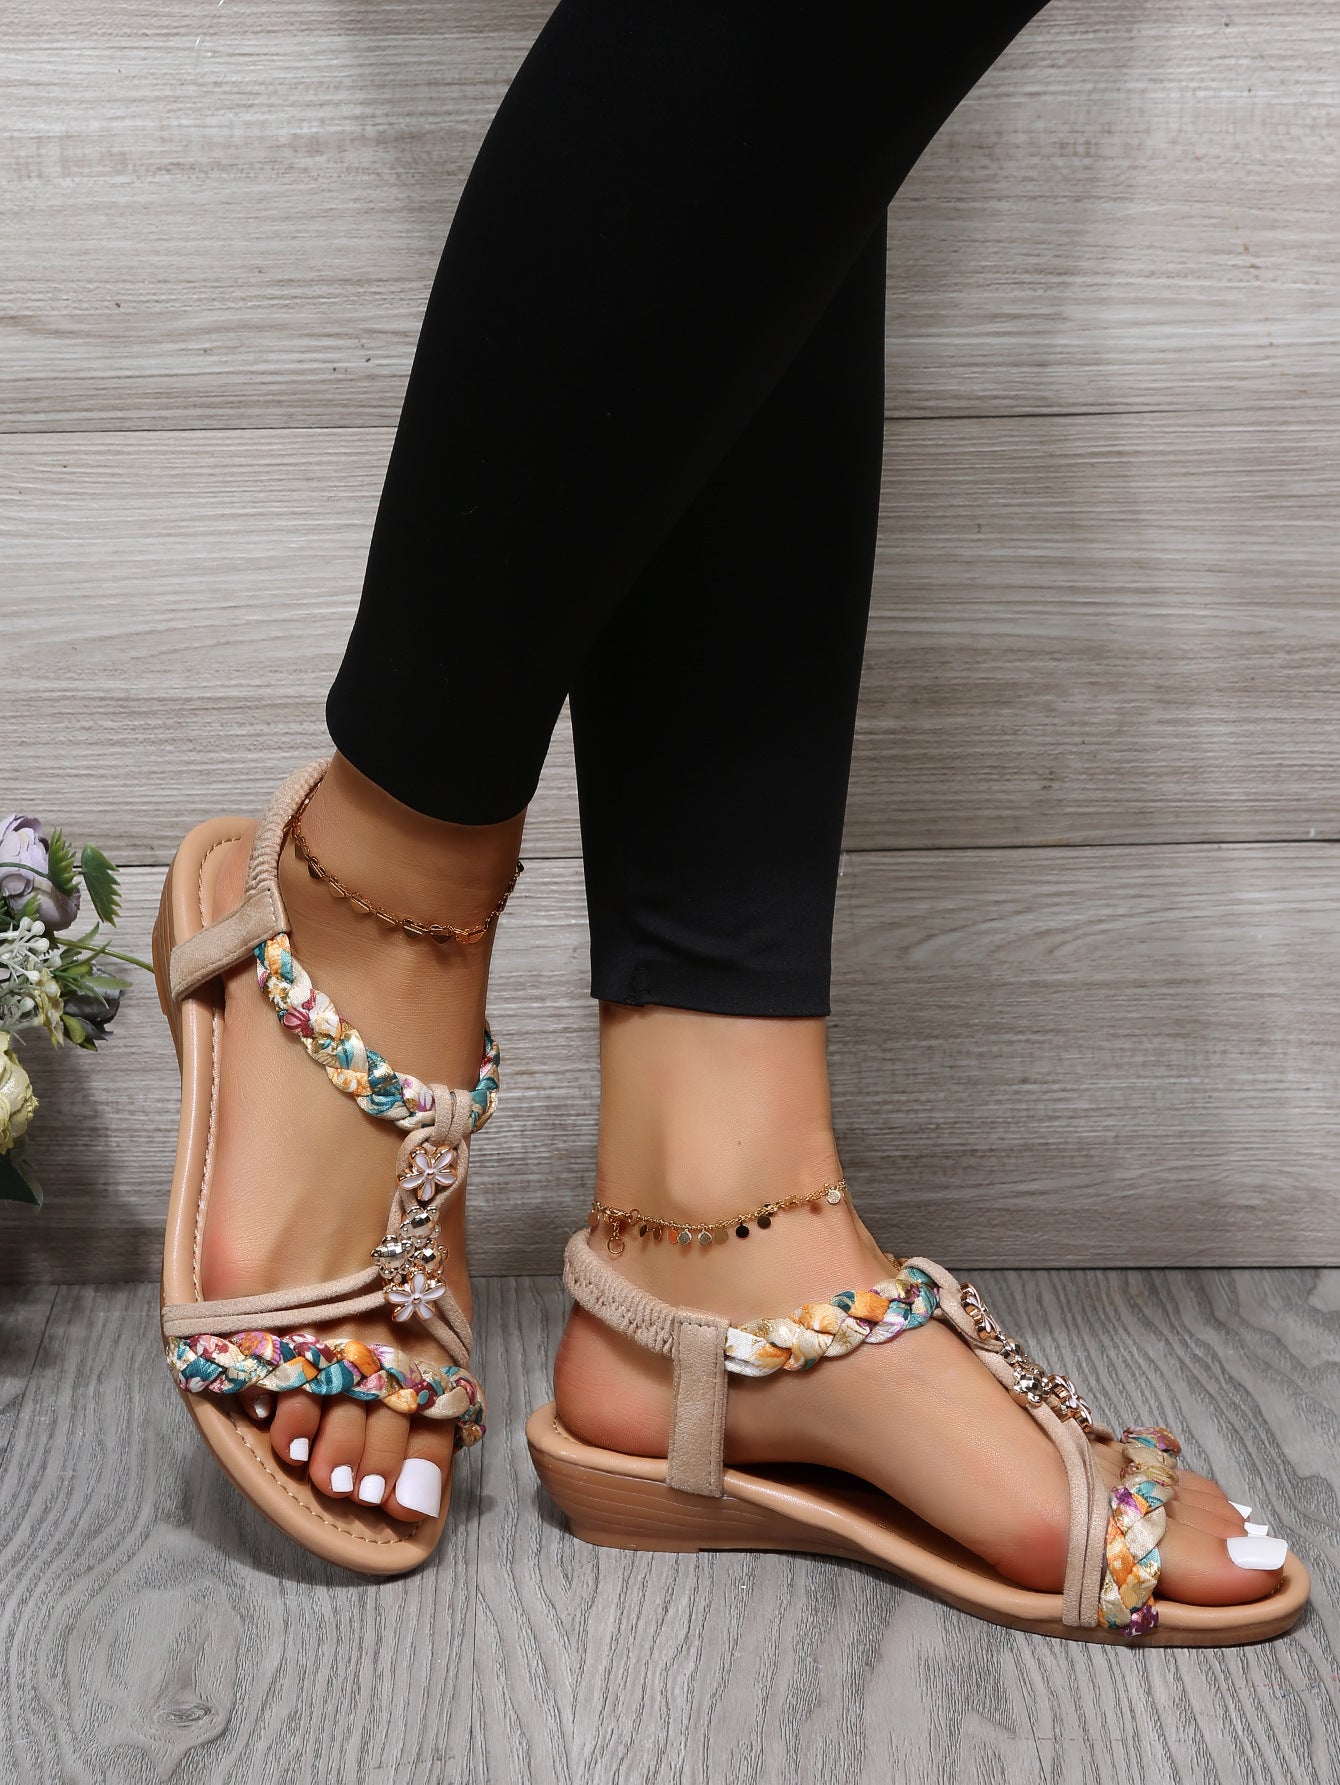 Women's Open Toe Sandals Made Of Color Block Fabric - Carvan Mart